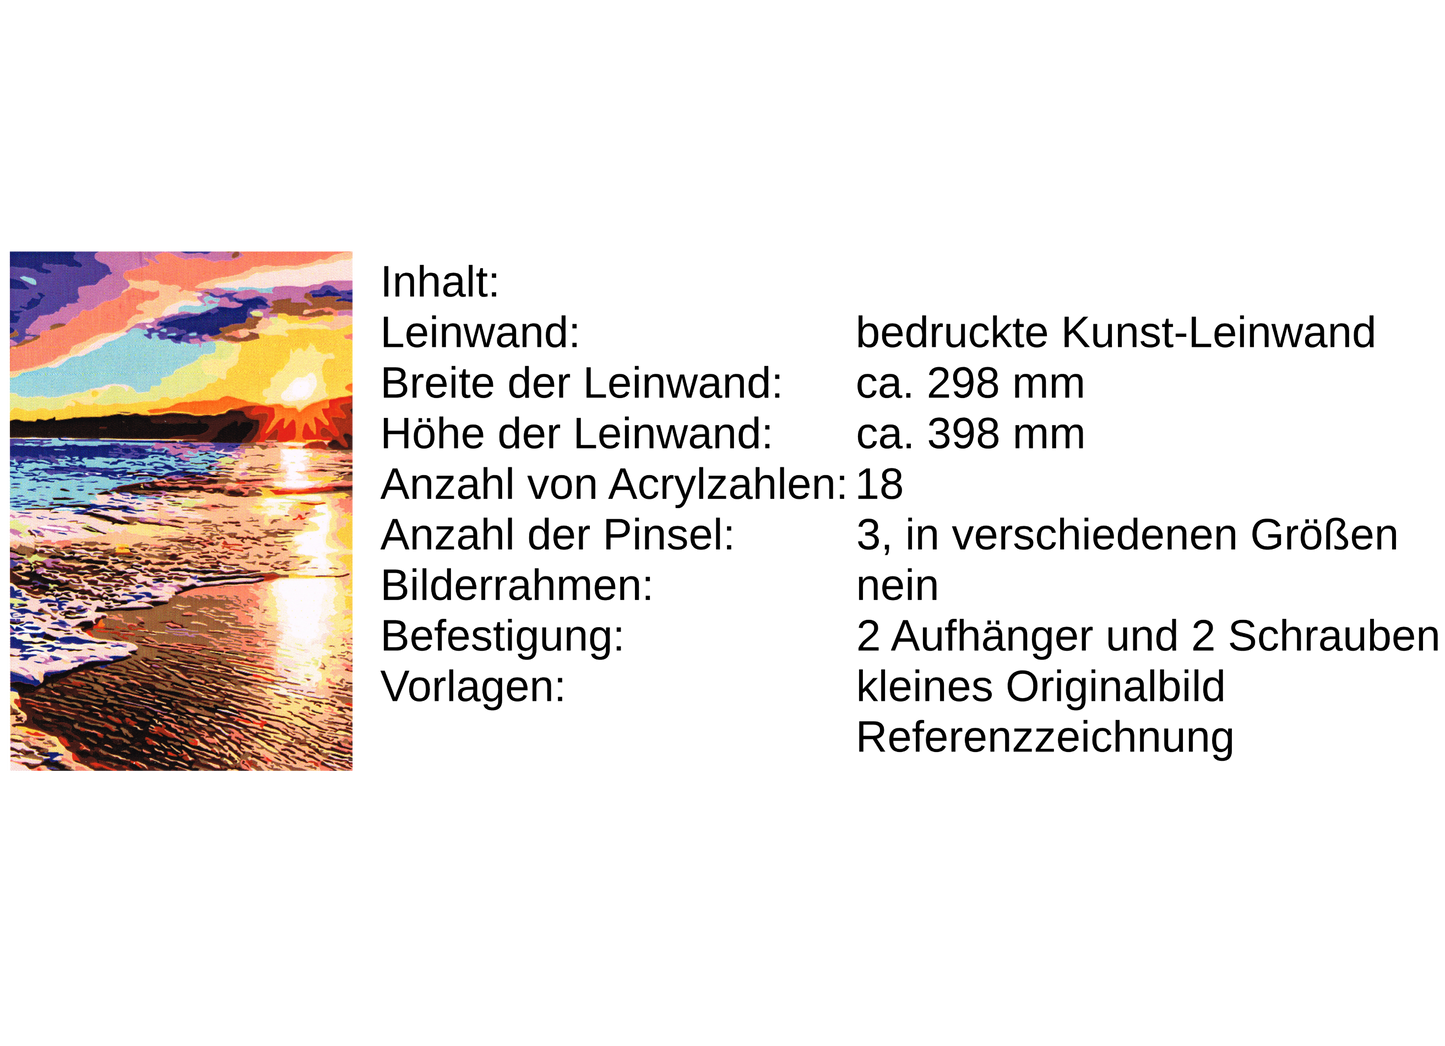 Sandstrand im Sonnenuntergang Malen nach Zahlen 18 Acrylfarben 298x398 mm A58